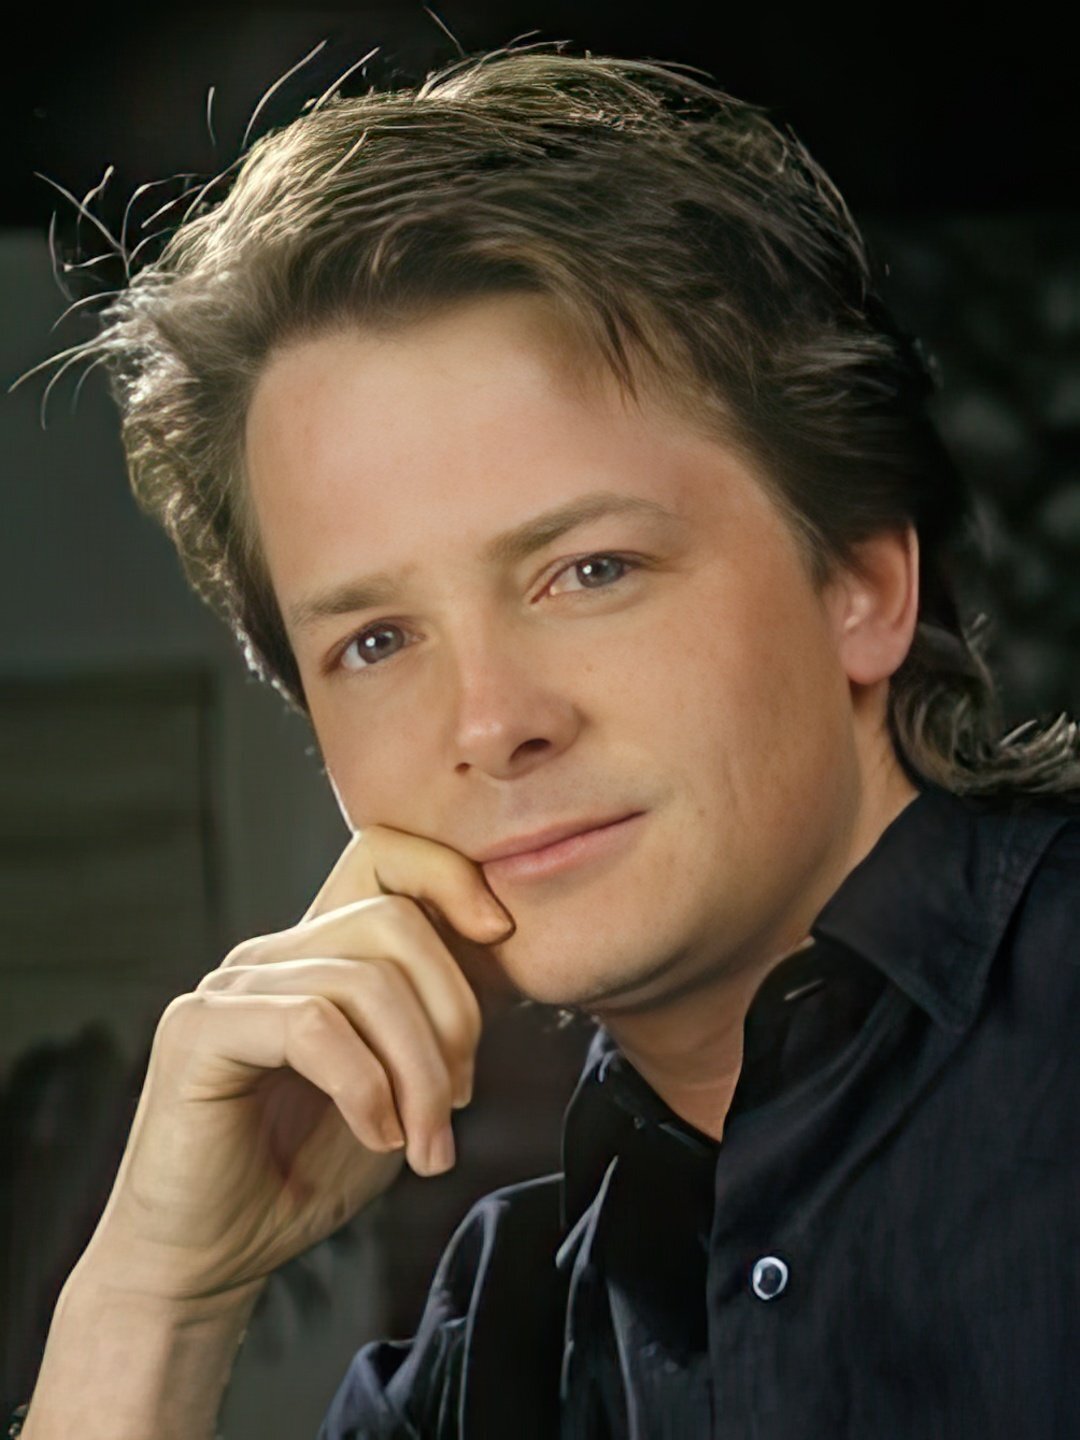 Michael J. Fox main achievements